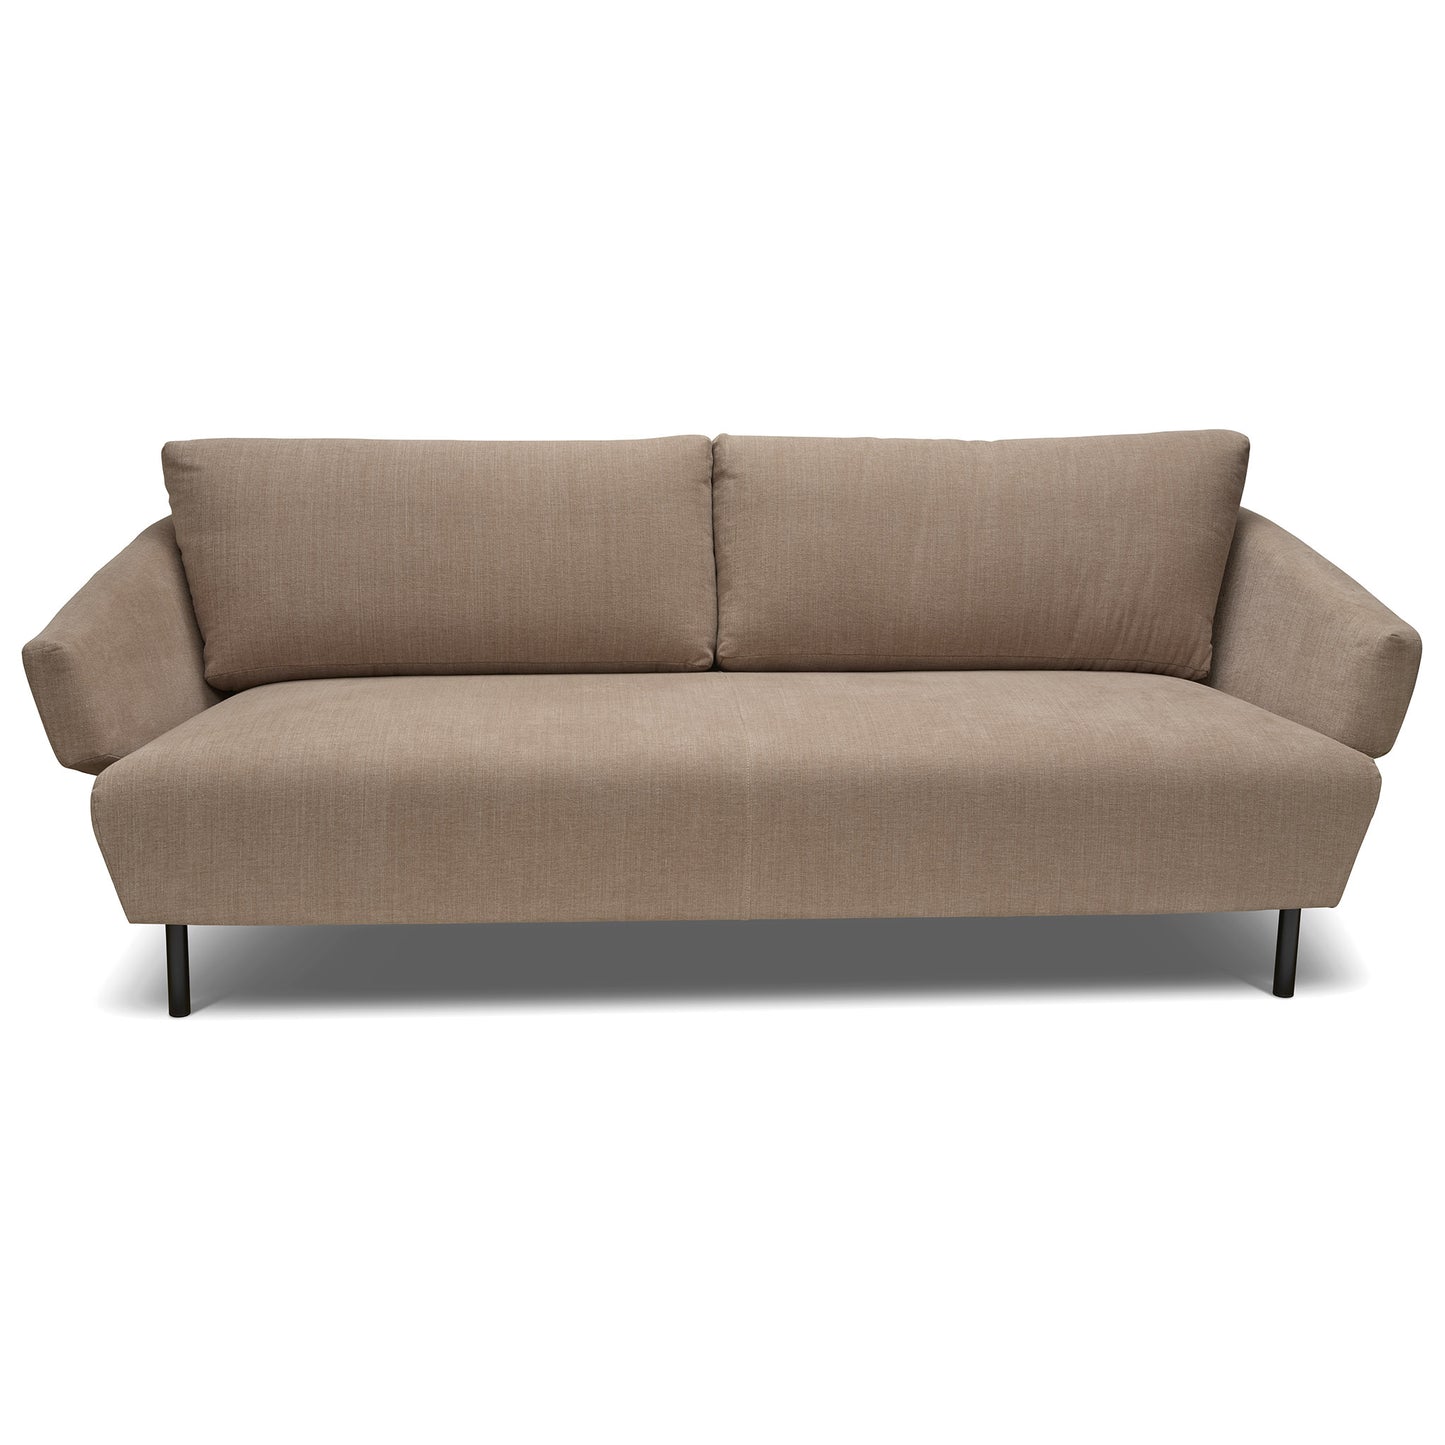 Modern 3 sits soffa med ett stilrent uttryck klädd i ett brunt linnetyg